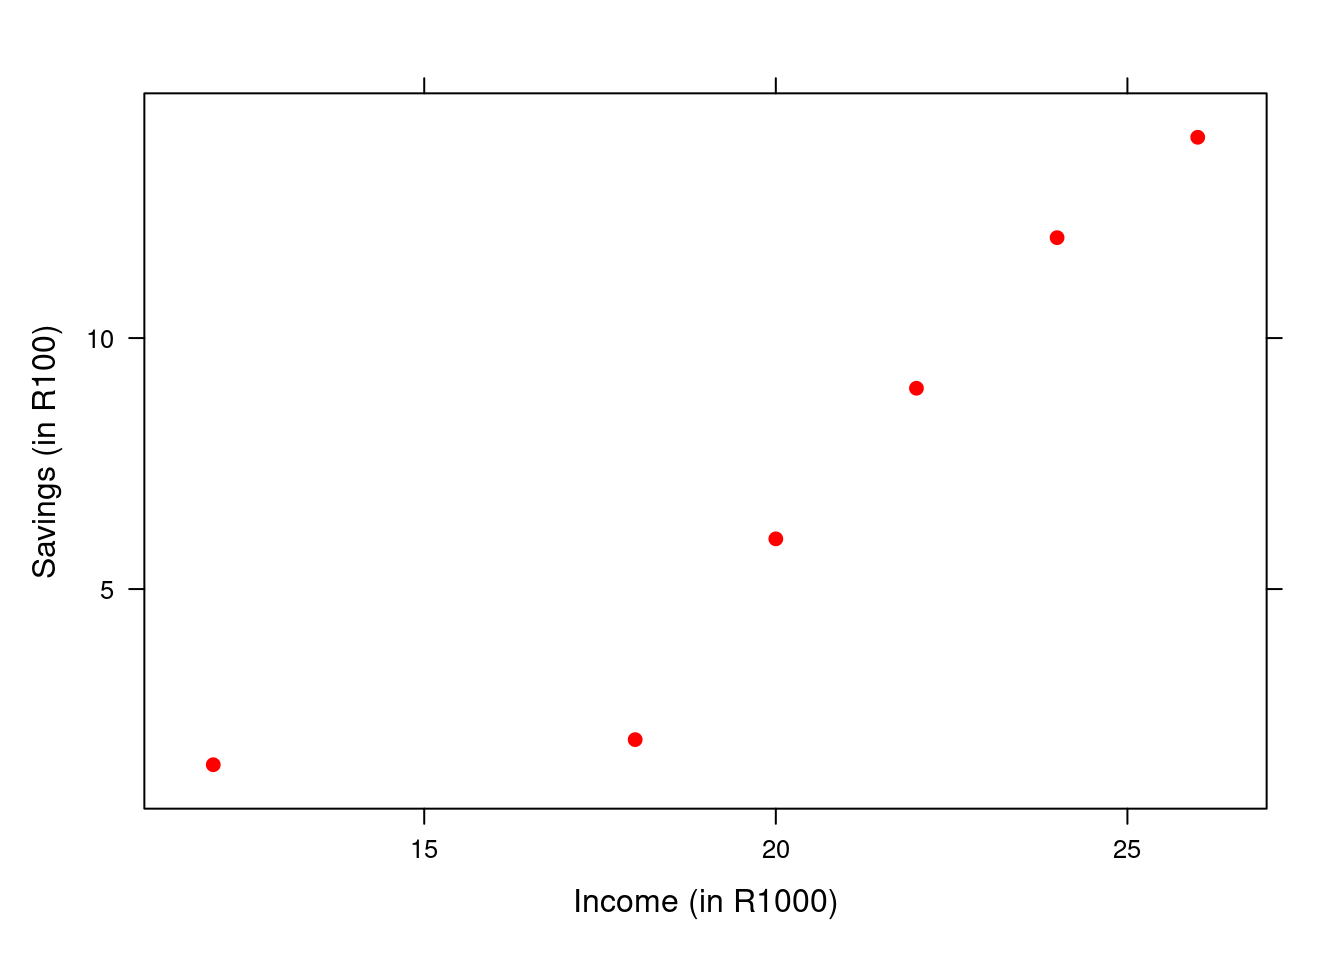 Scatter plot for income-savings data